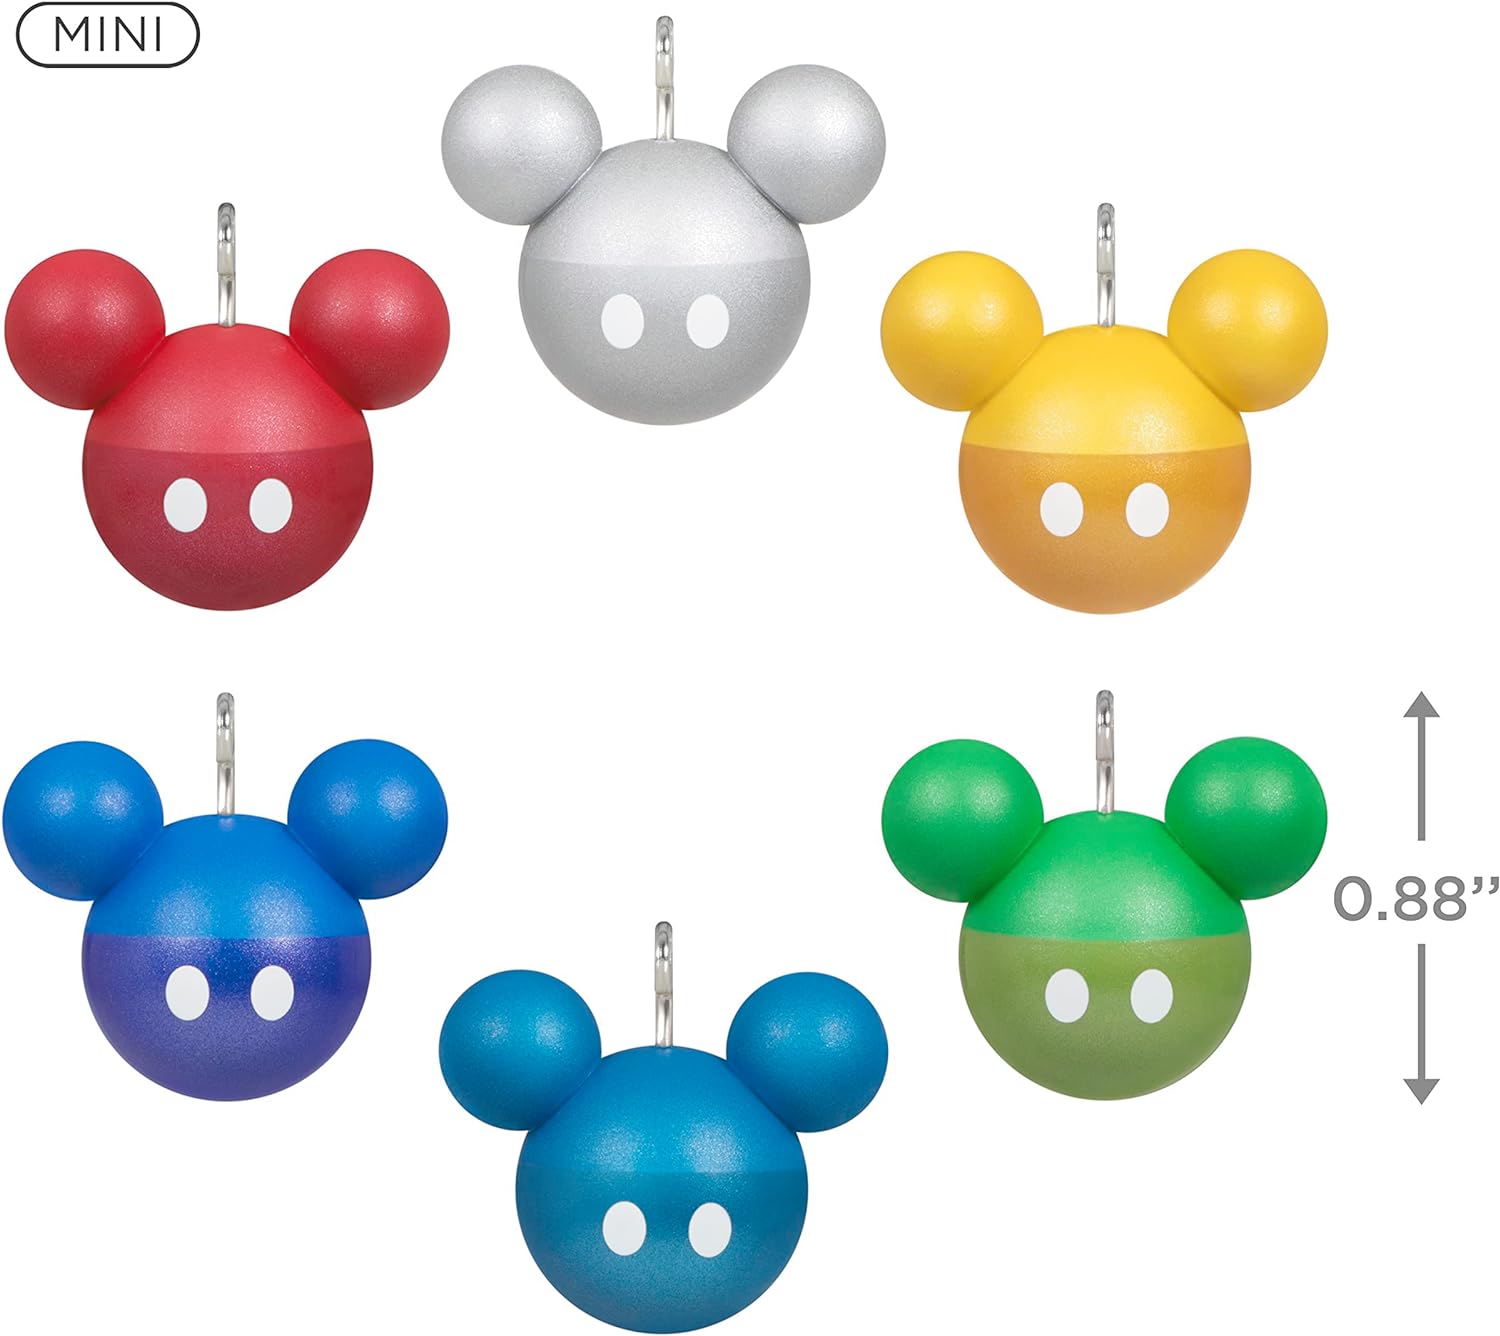 Mini Disney Mickey Mouse Ornaments, Set of 6